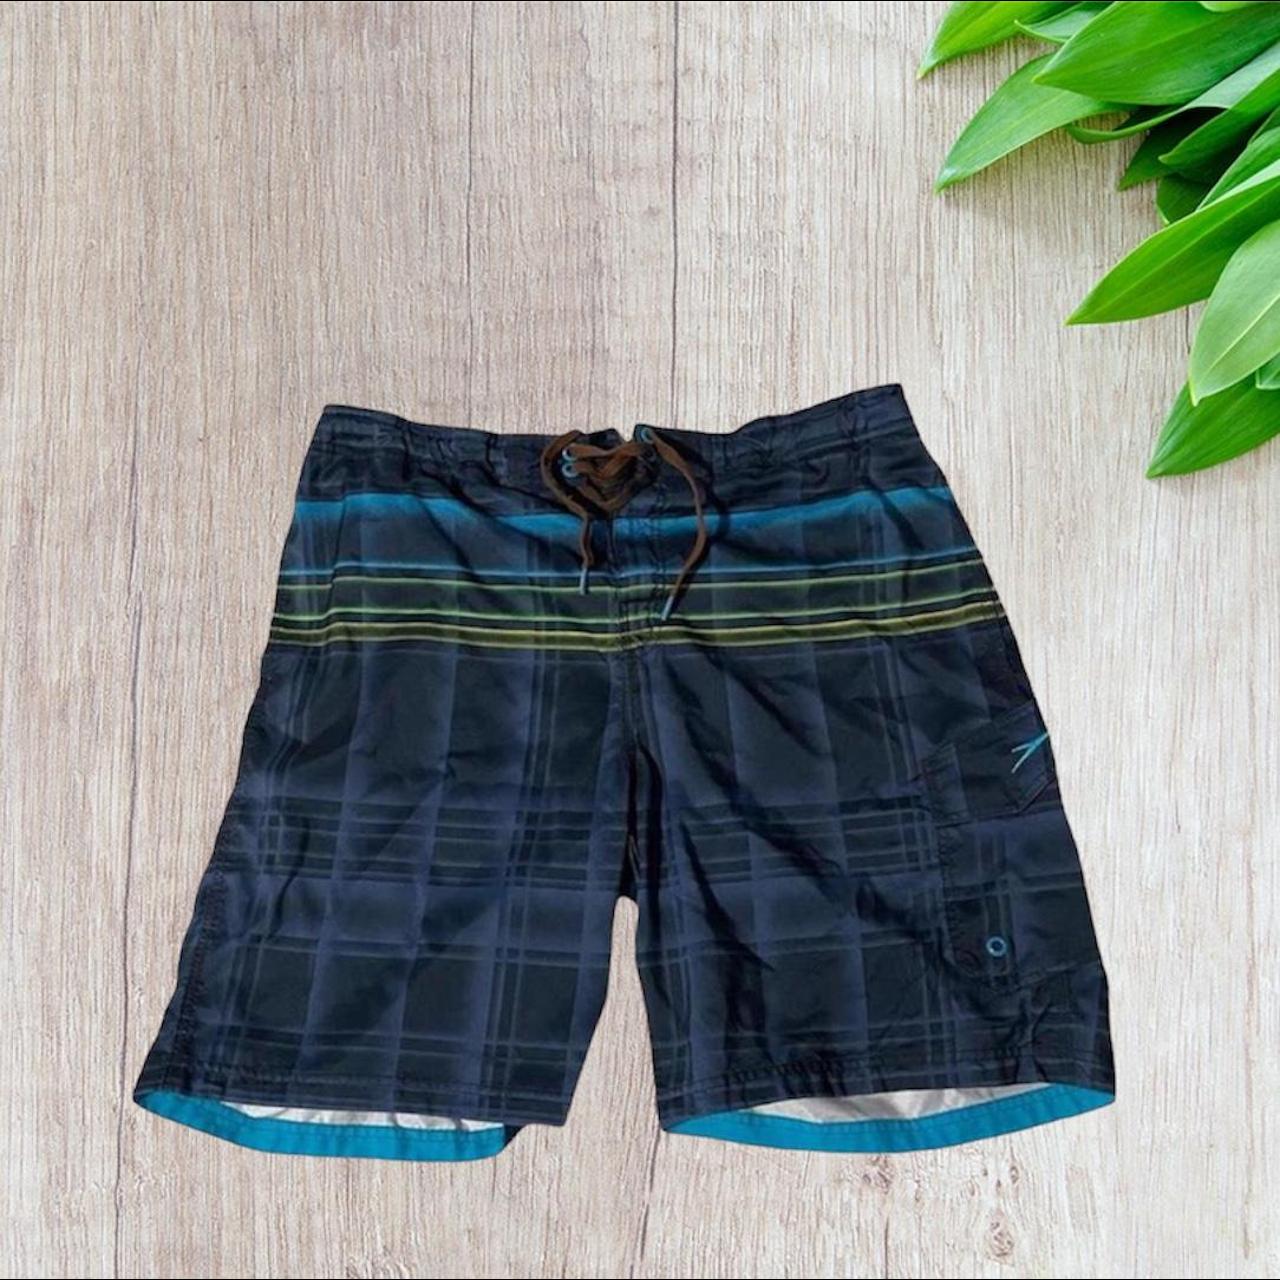 Product Image 1 - Men’s swim shorts (XL). In